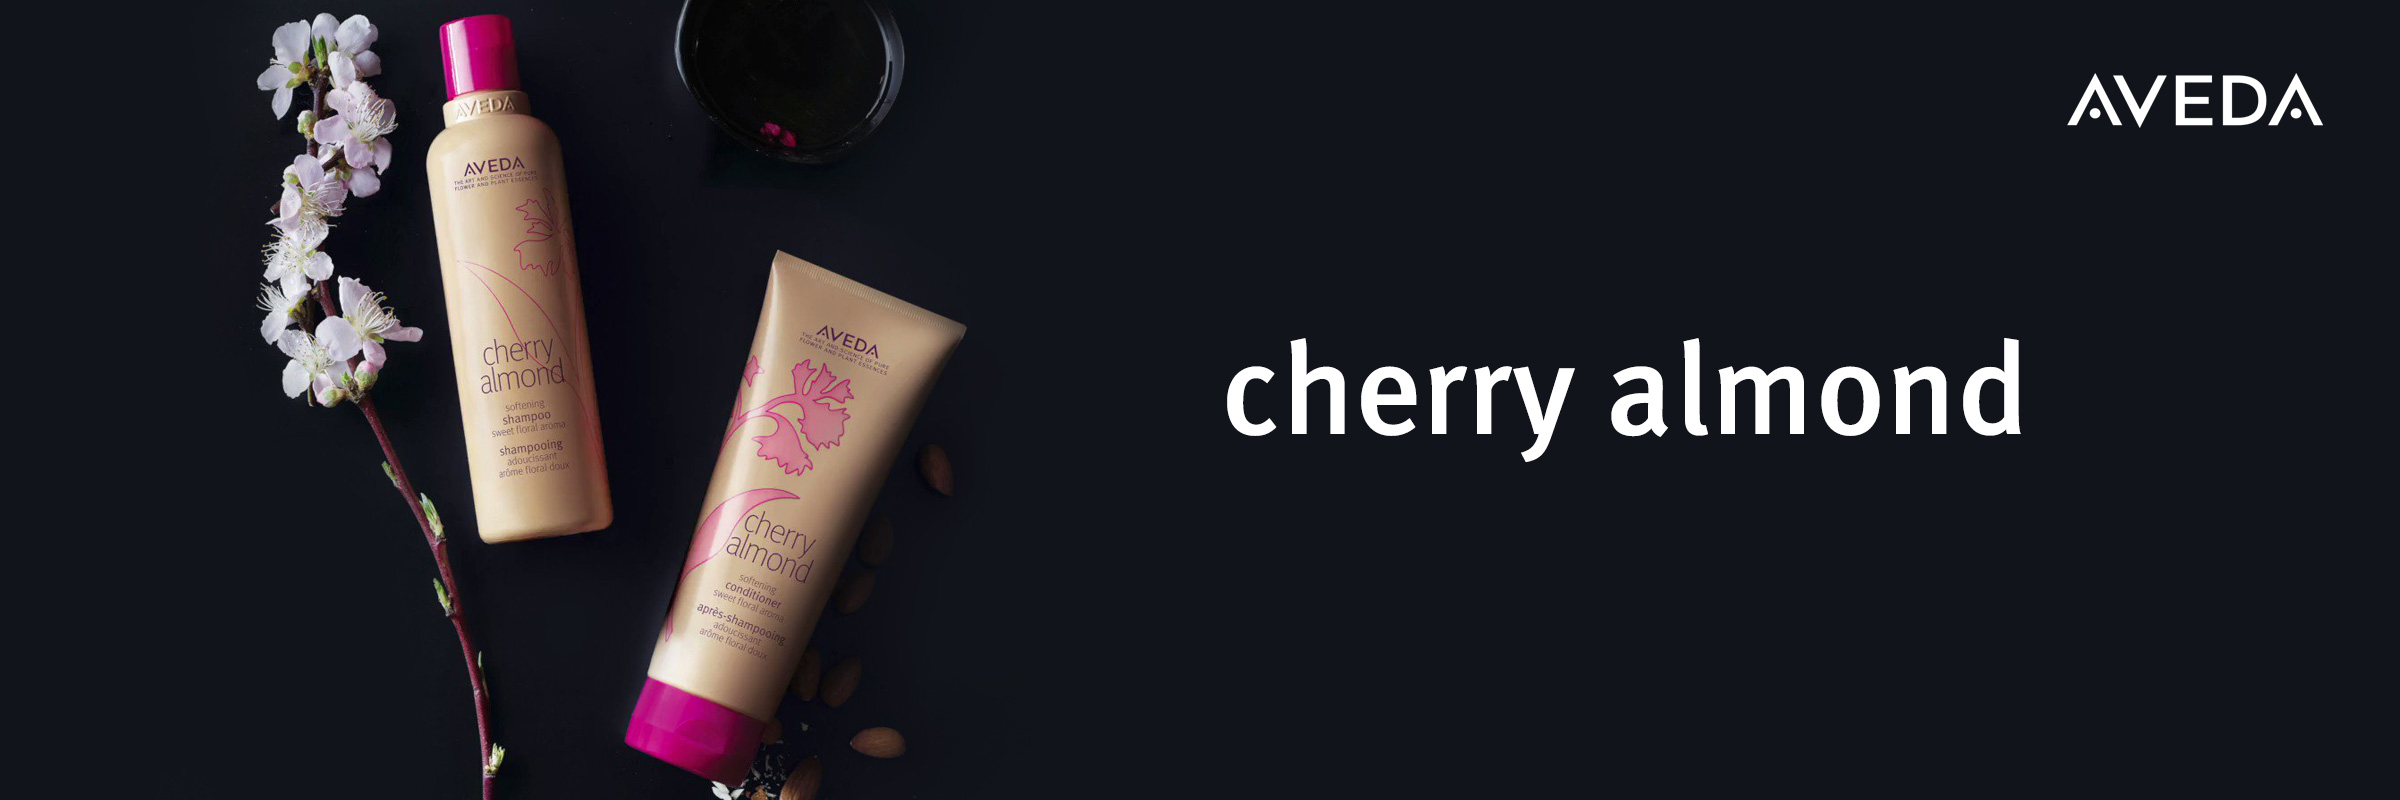 Aveda Cherry Almond